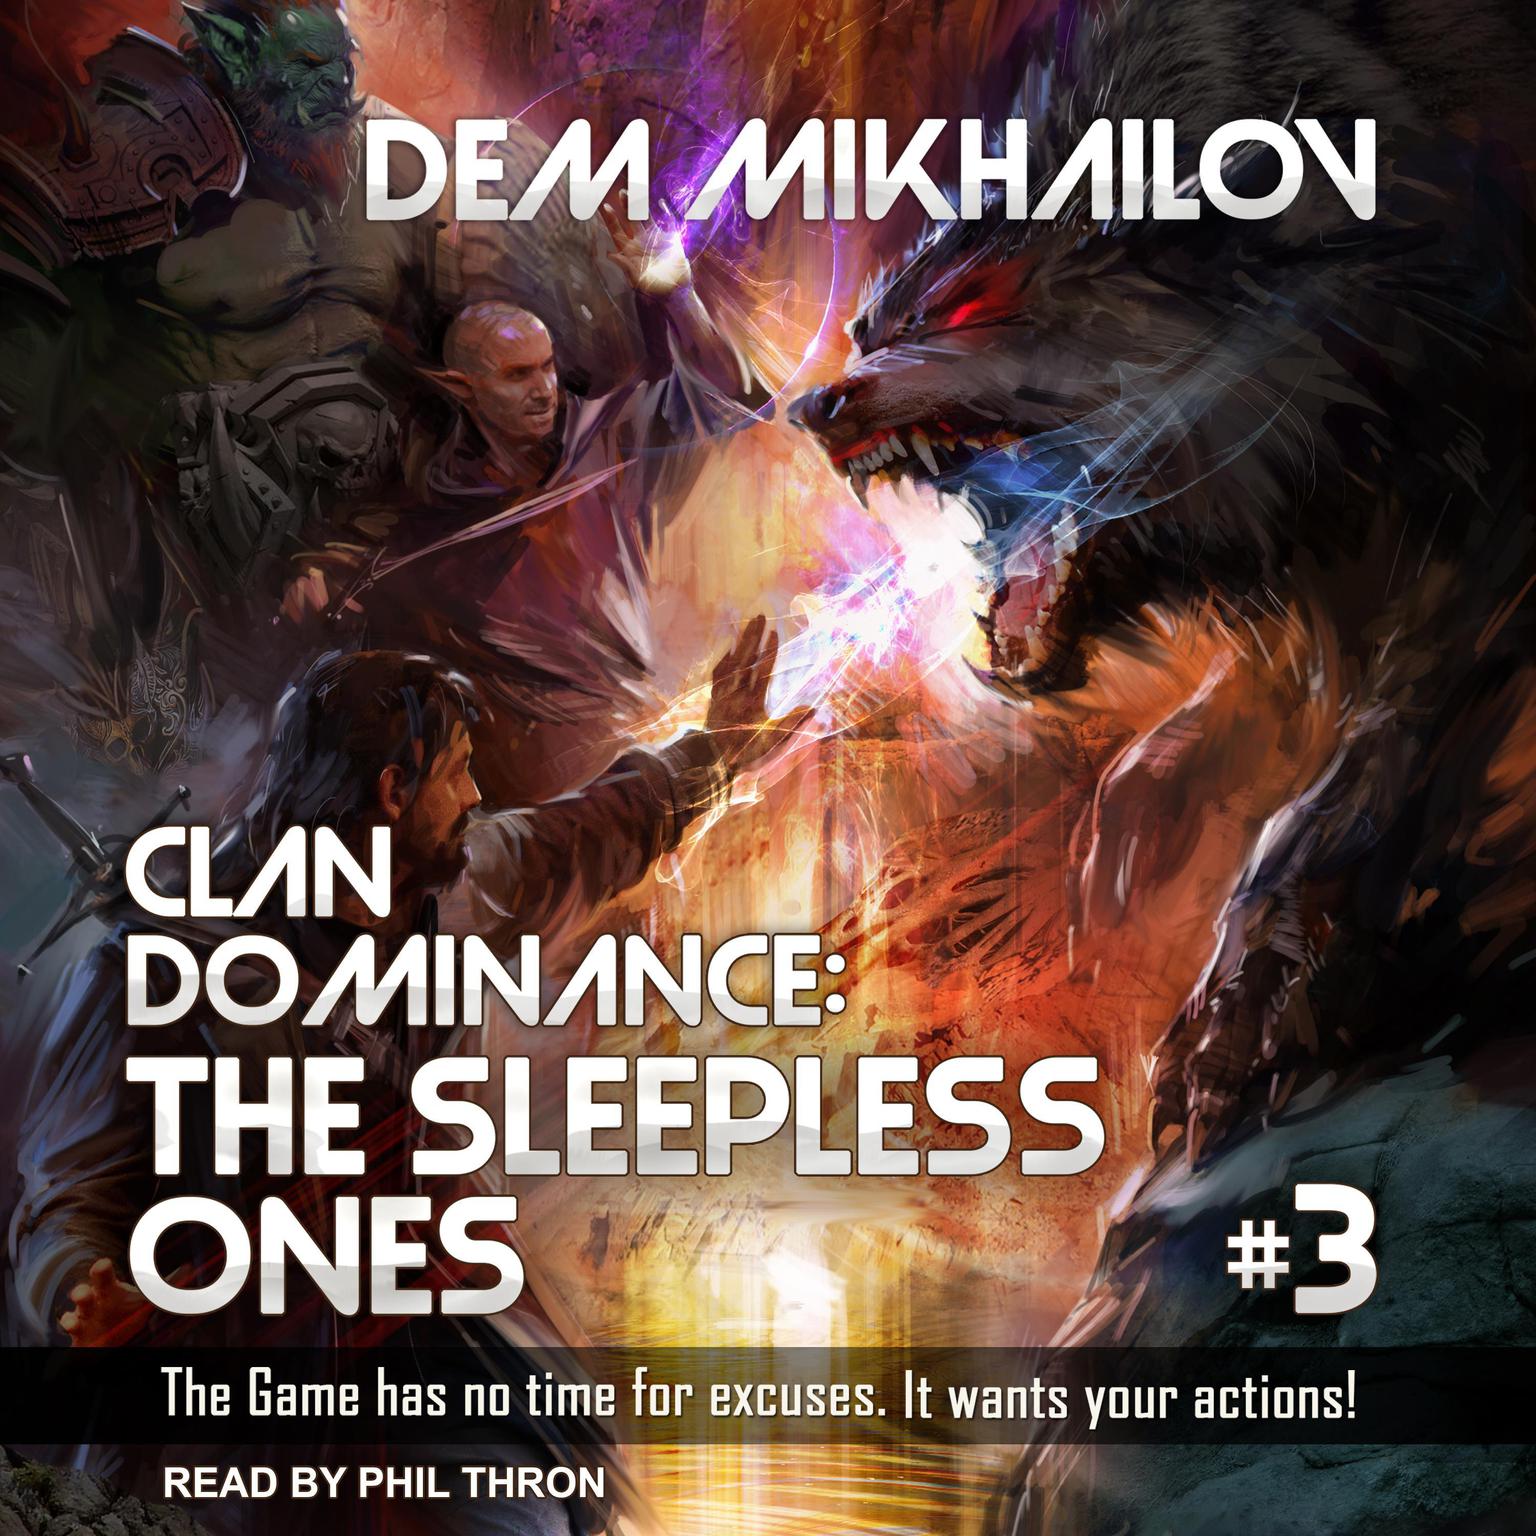 Clan Dominance: The Sleepless Ones #3 Audiobook, by Dem Mikhailov